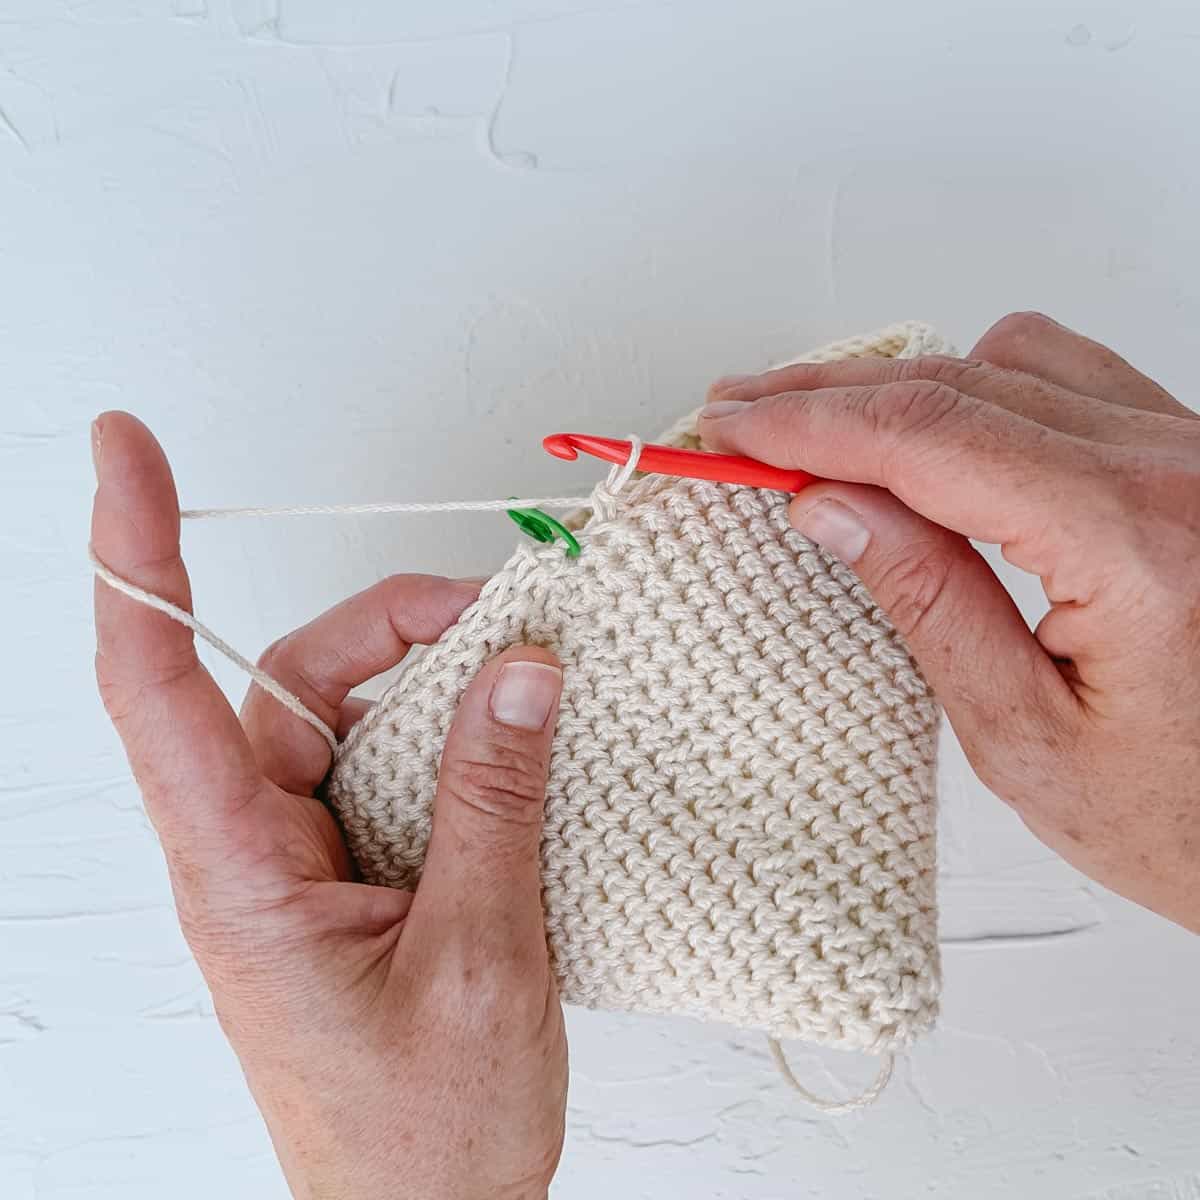 Crochet potholder in progress with thermal stitch.